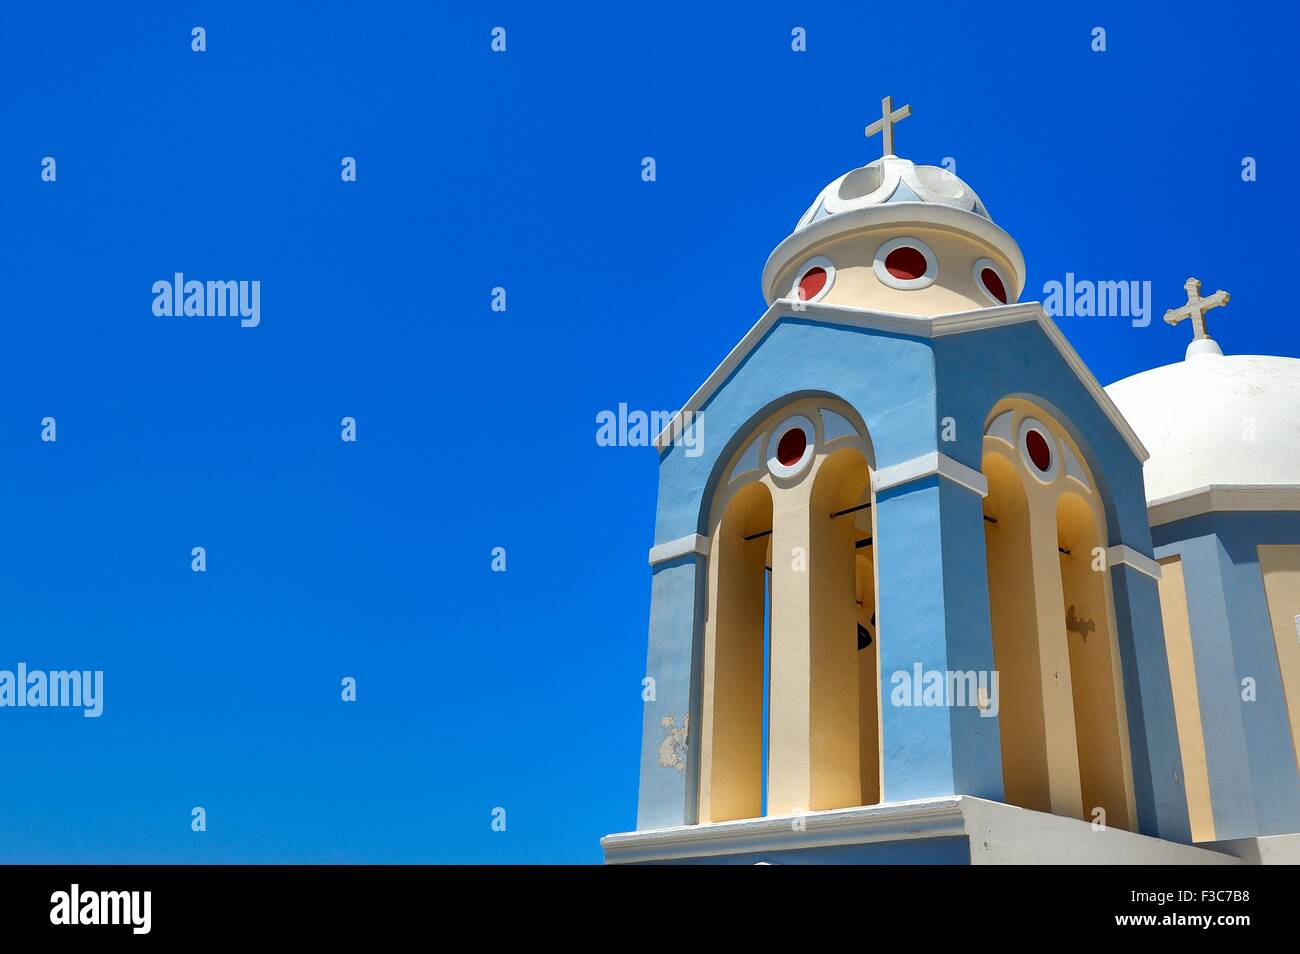 Catholic Church of Saint Stylianos Fira Santorini Greece Stock Photo